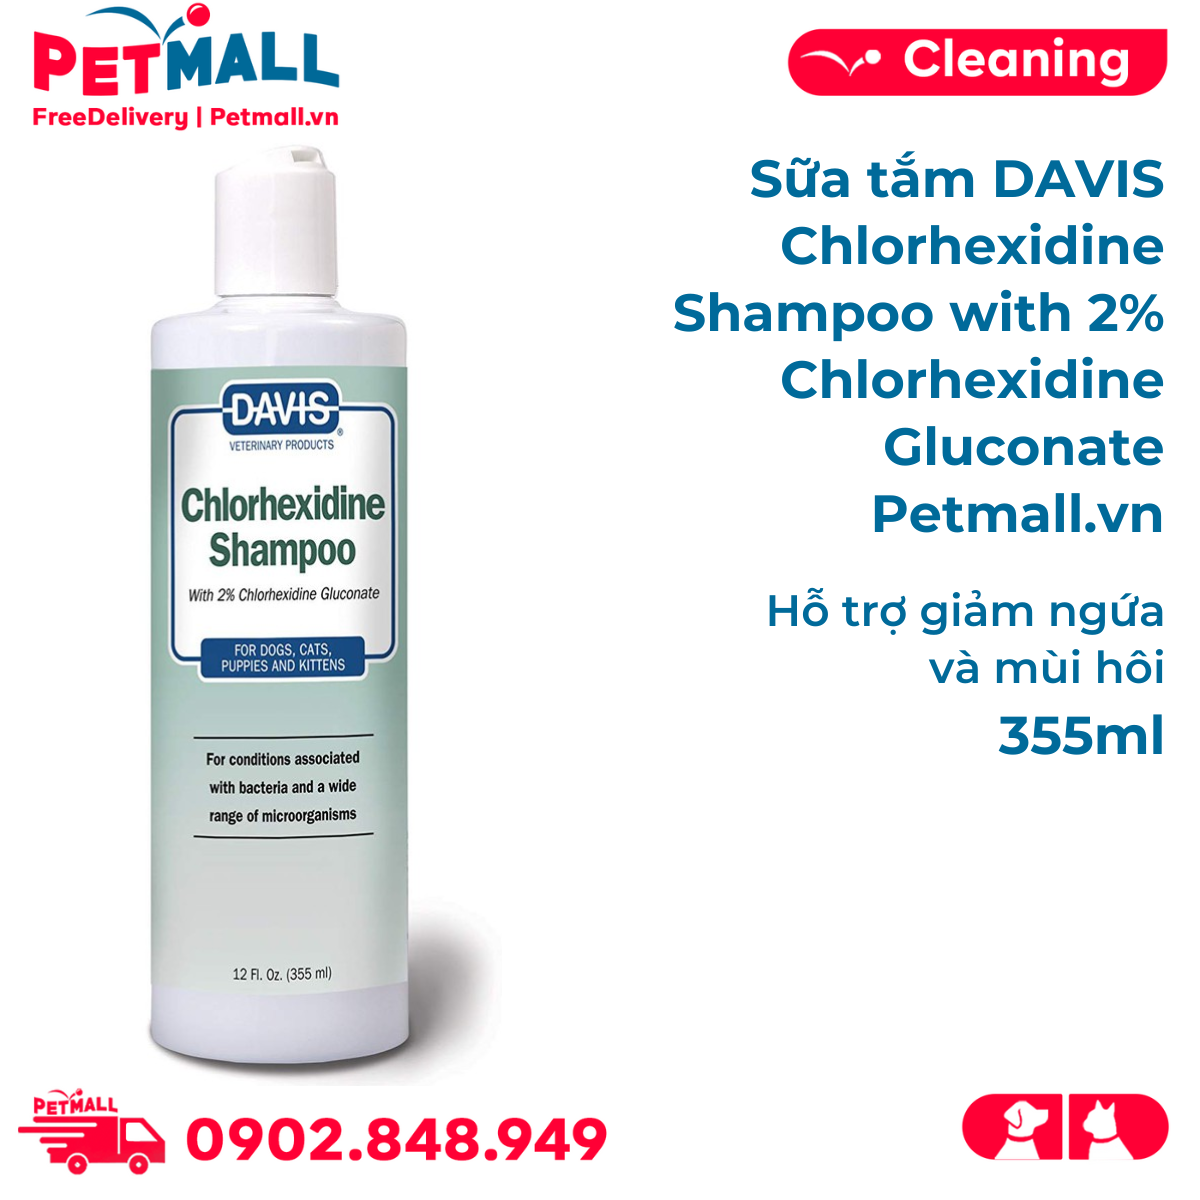 Sữa tắm DAVIS Chlorhexidine Shampoo with 2% Chlorhexidine Gluconate 355ml